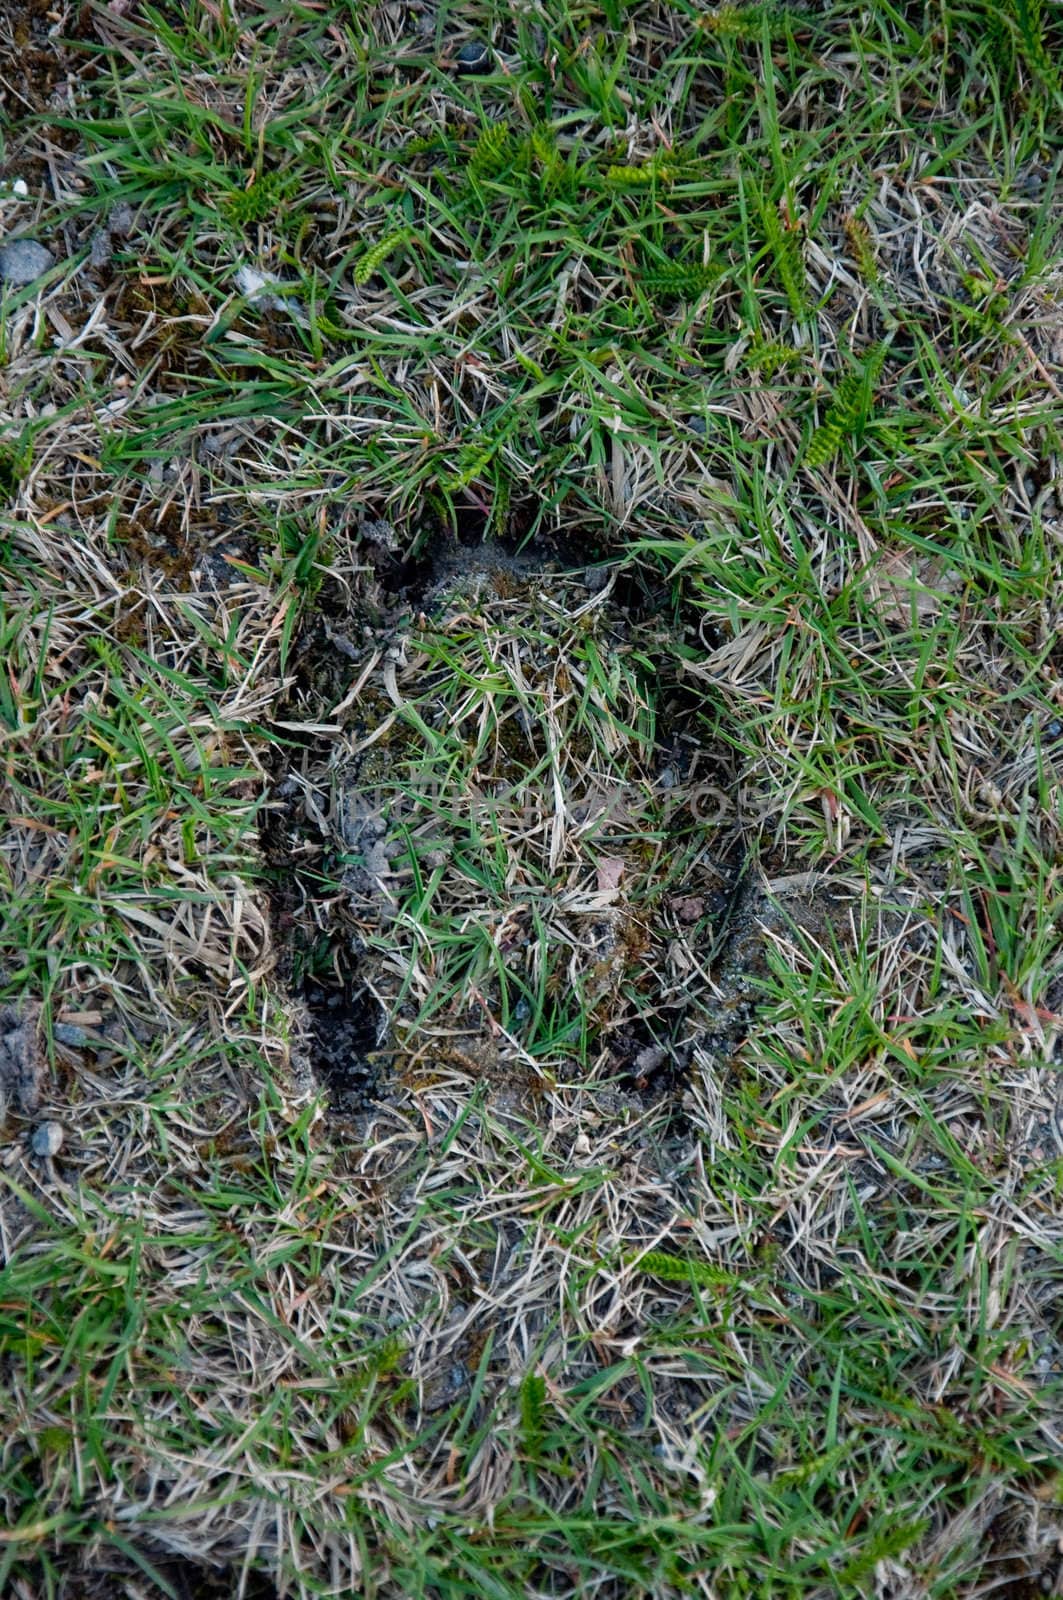 Inprint off a hourseshoe mark in grass